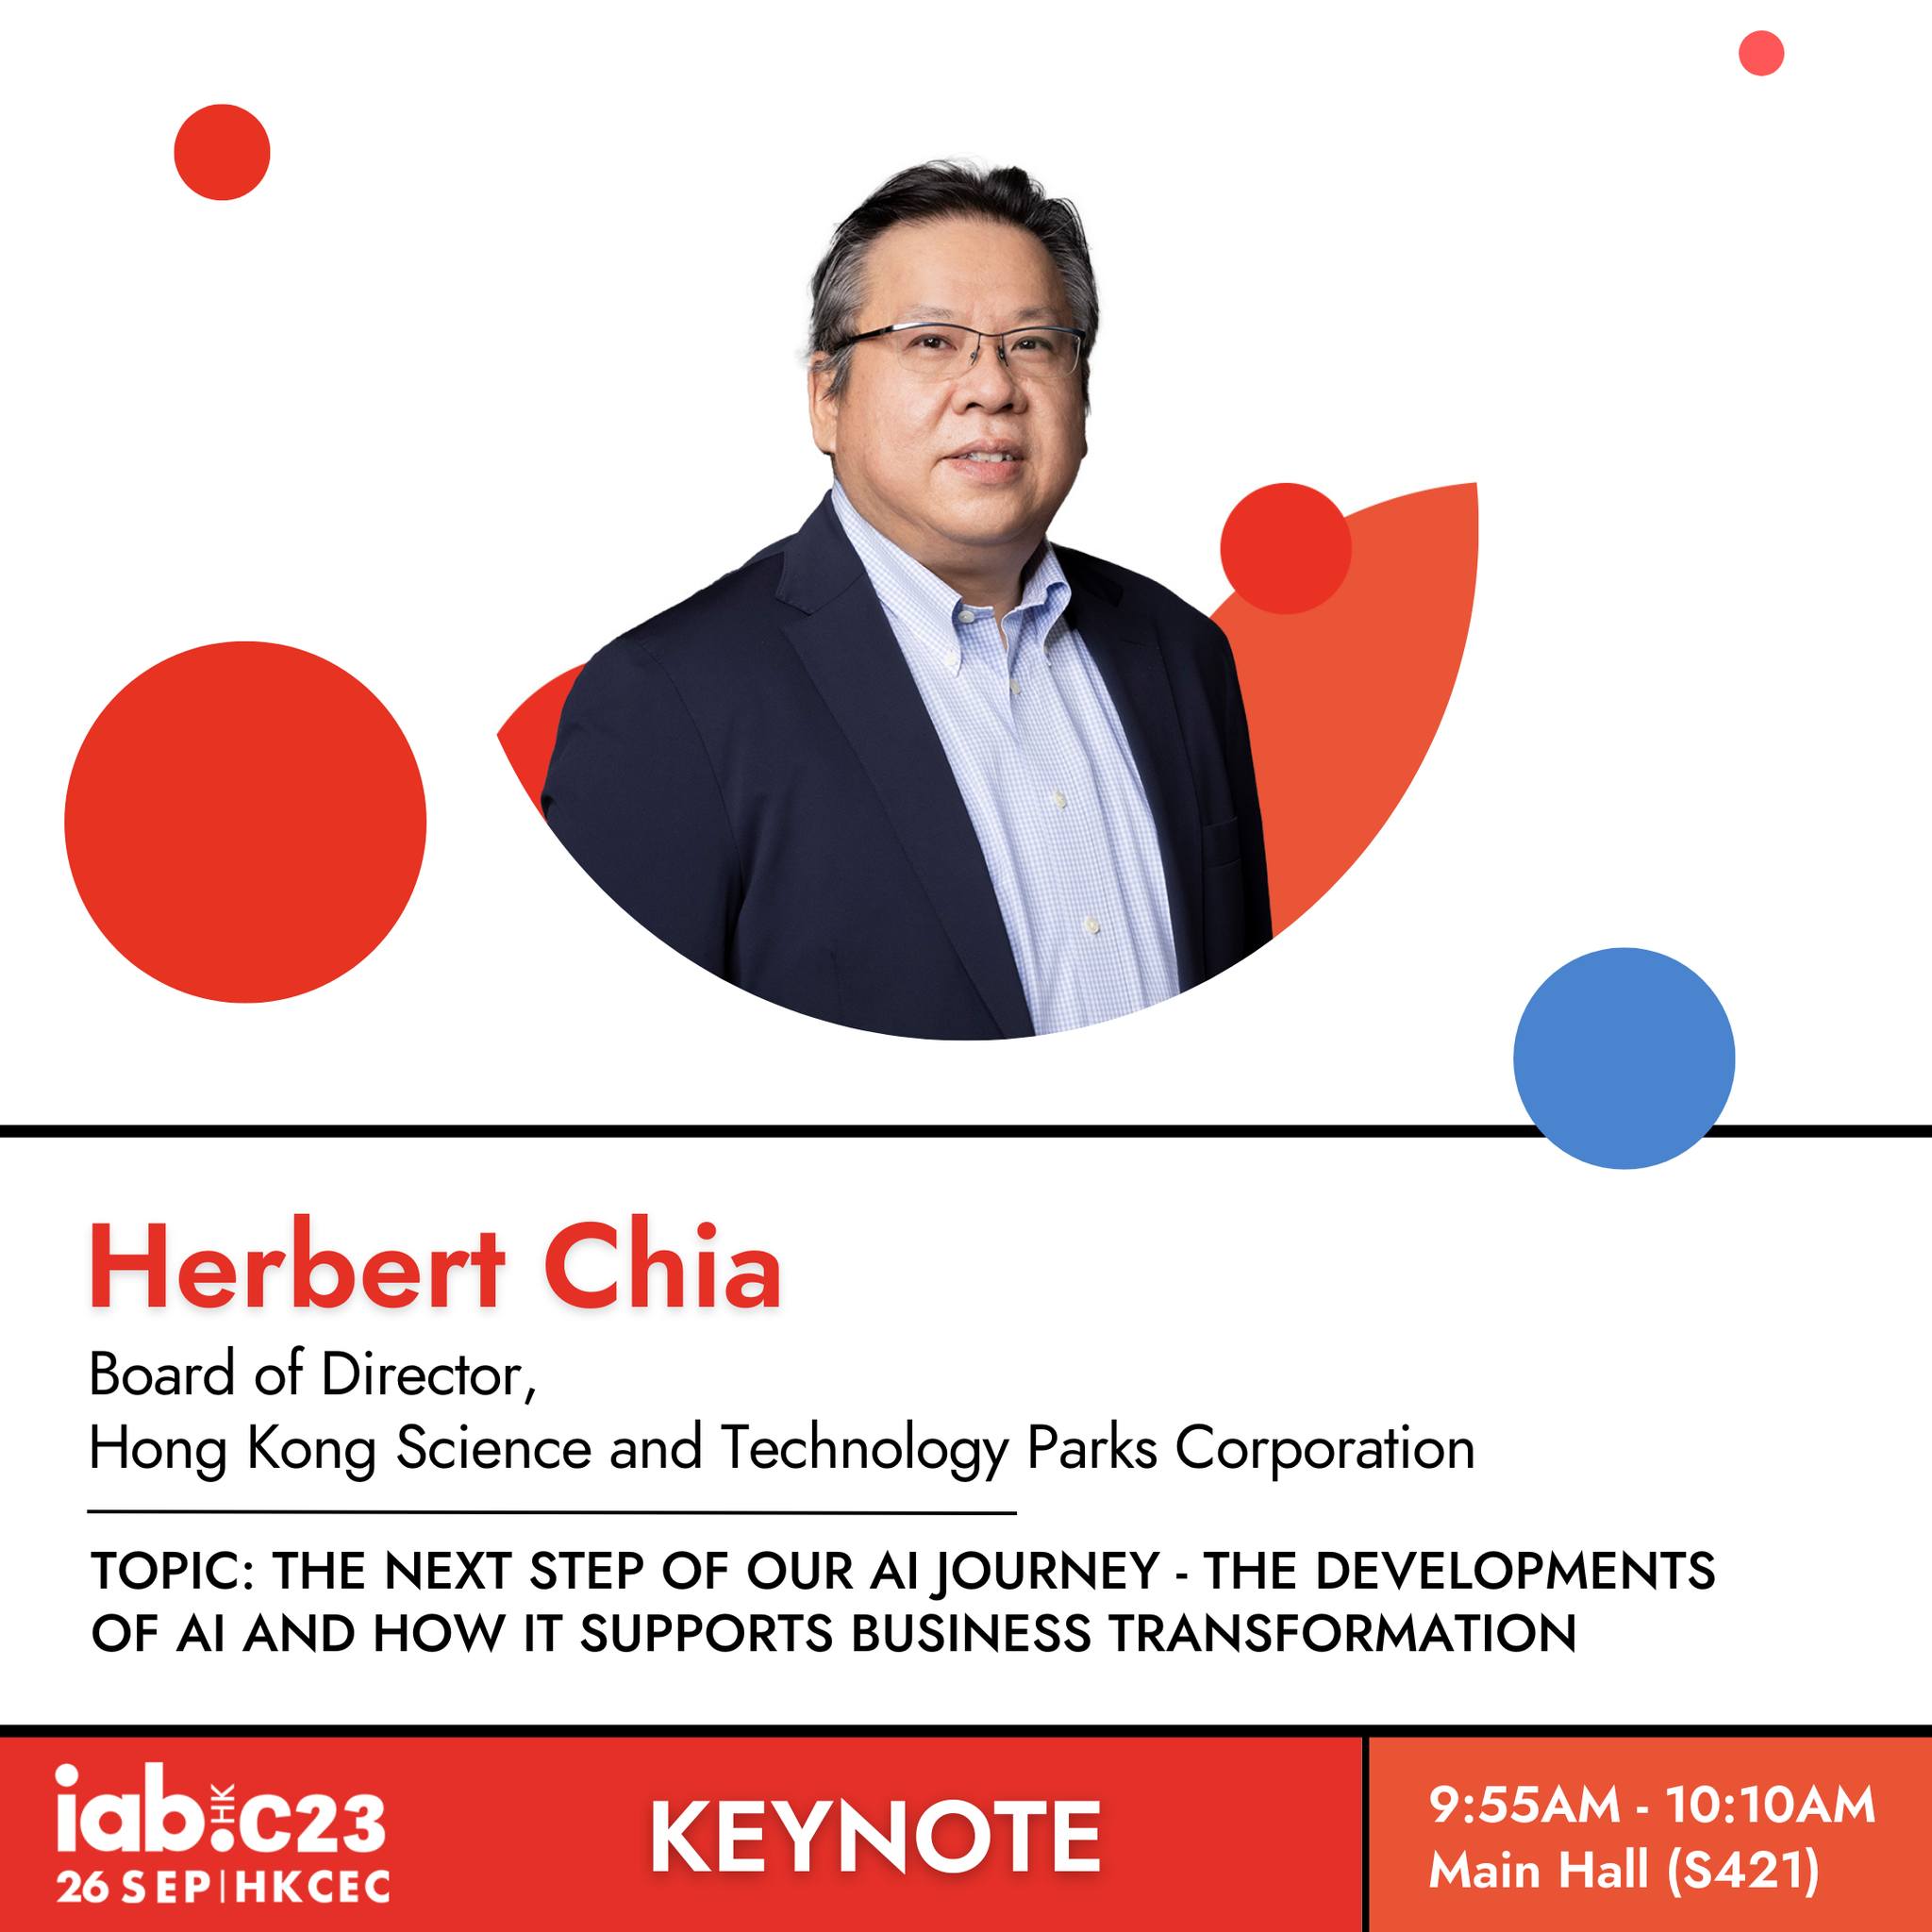 Keynote 1 - Herbert Chia